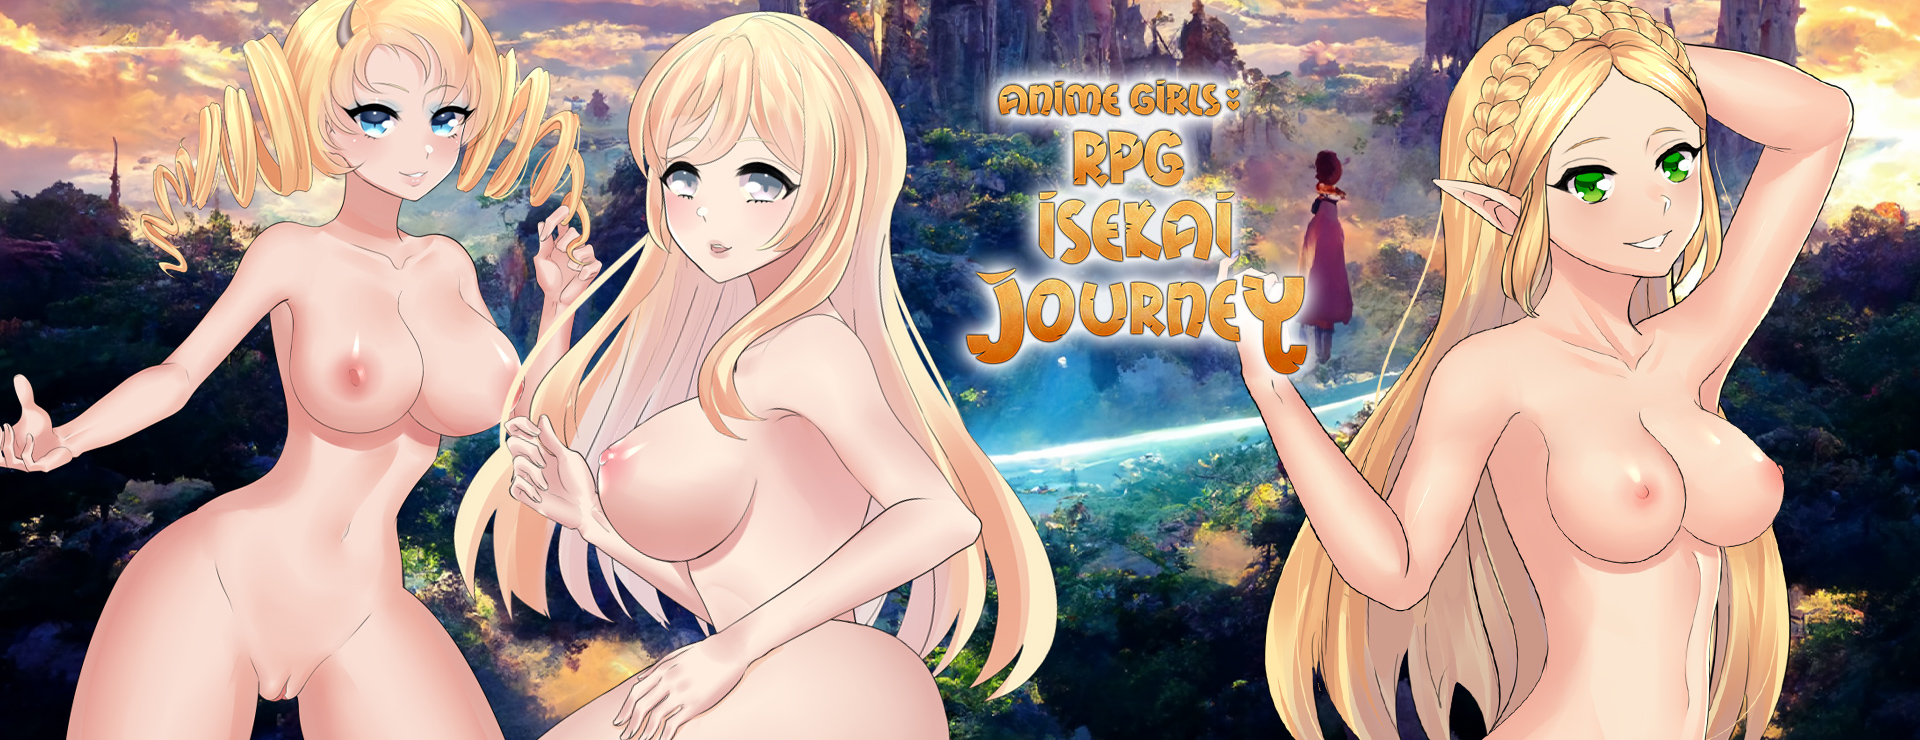 Anime RPG Isekai Journey - Action Adventure Spiel